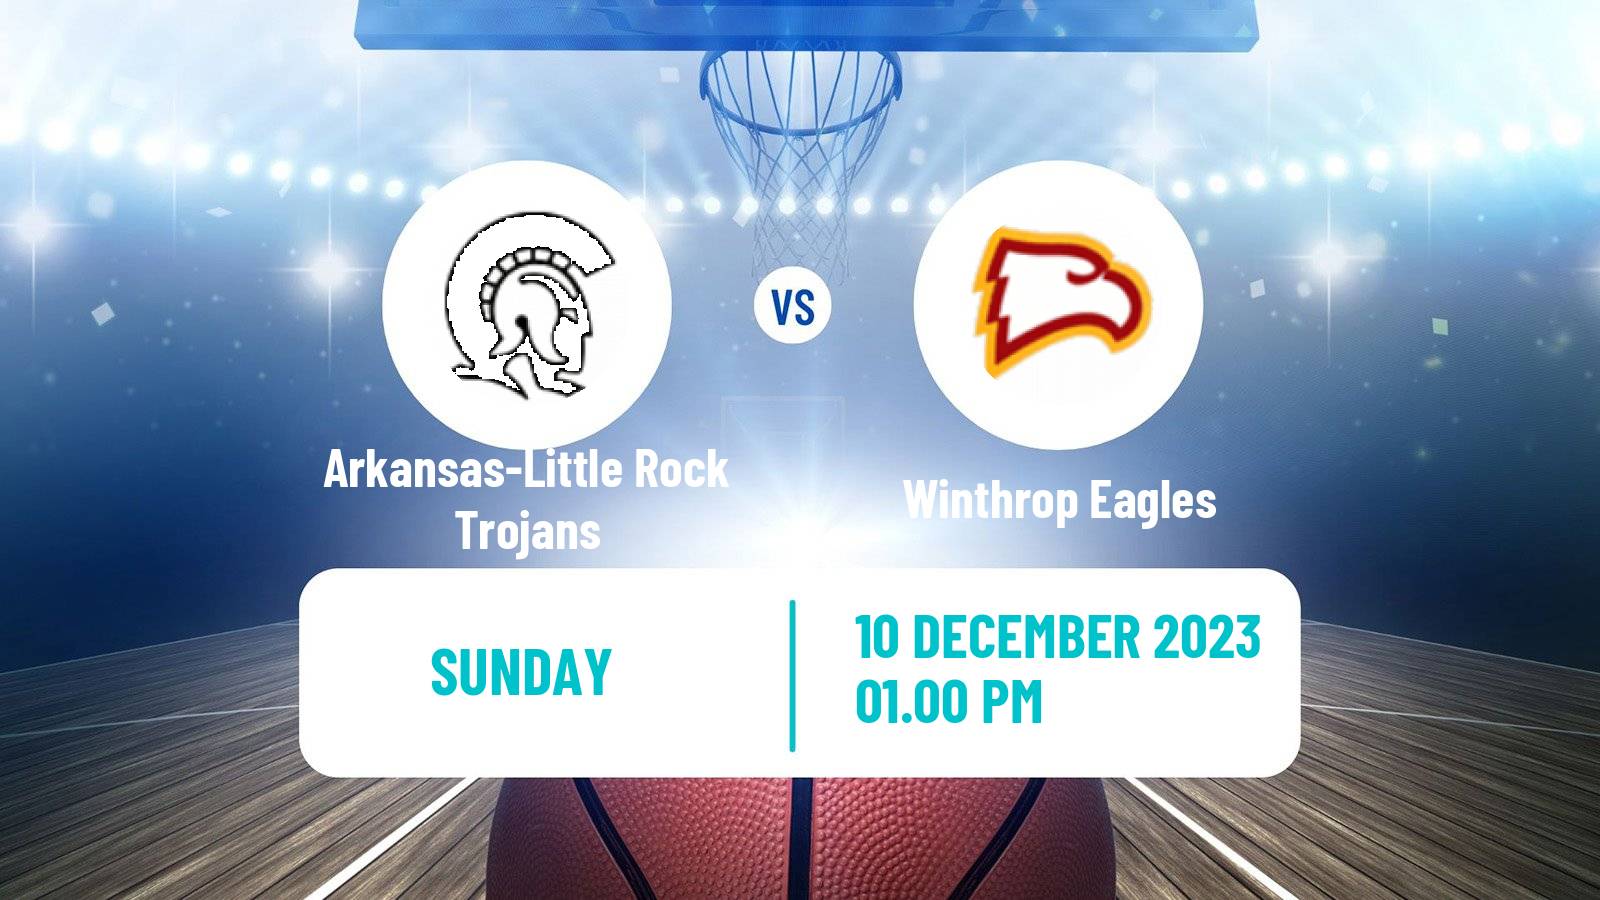 Basketball NCAA College Basketball Arkansas-Little Rock Trojans - Winthrop Eagles